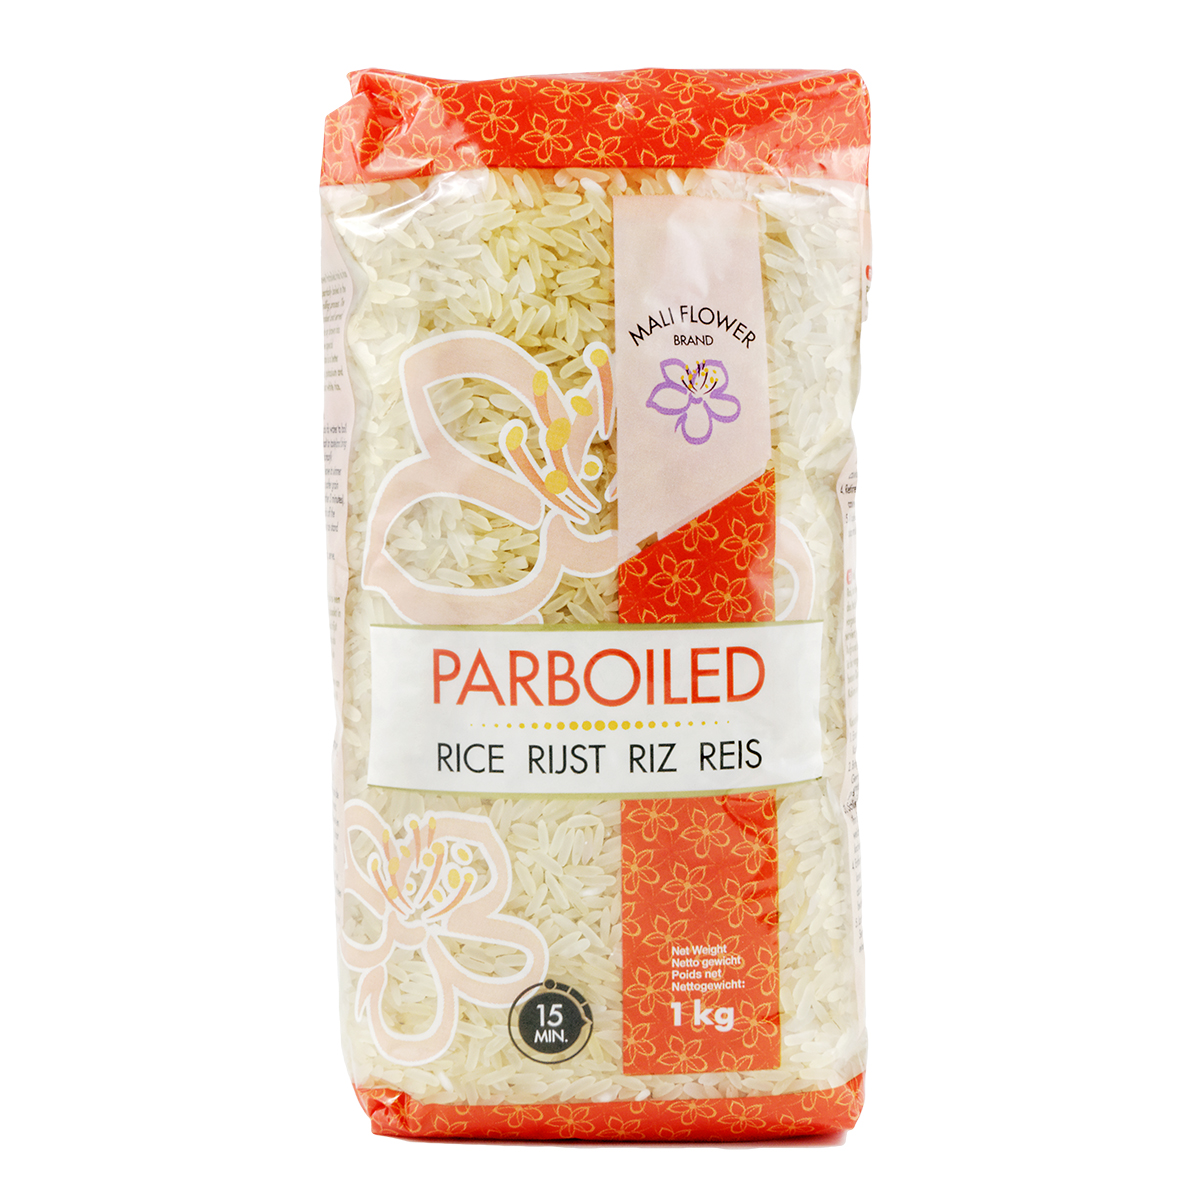 Alte tipuri de orez - Orez cu bob lung prefiert MALI FLOWER 1kg, asianfood.ro